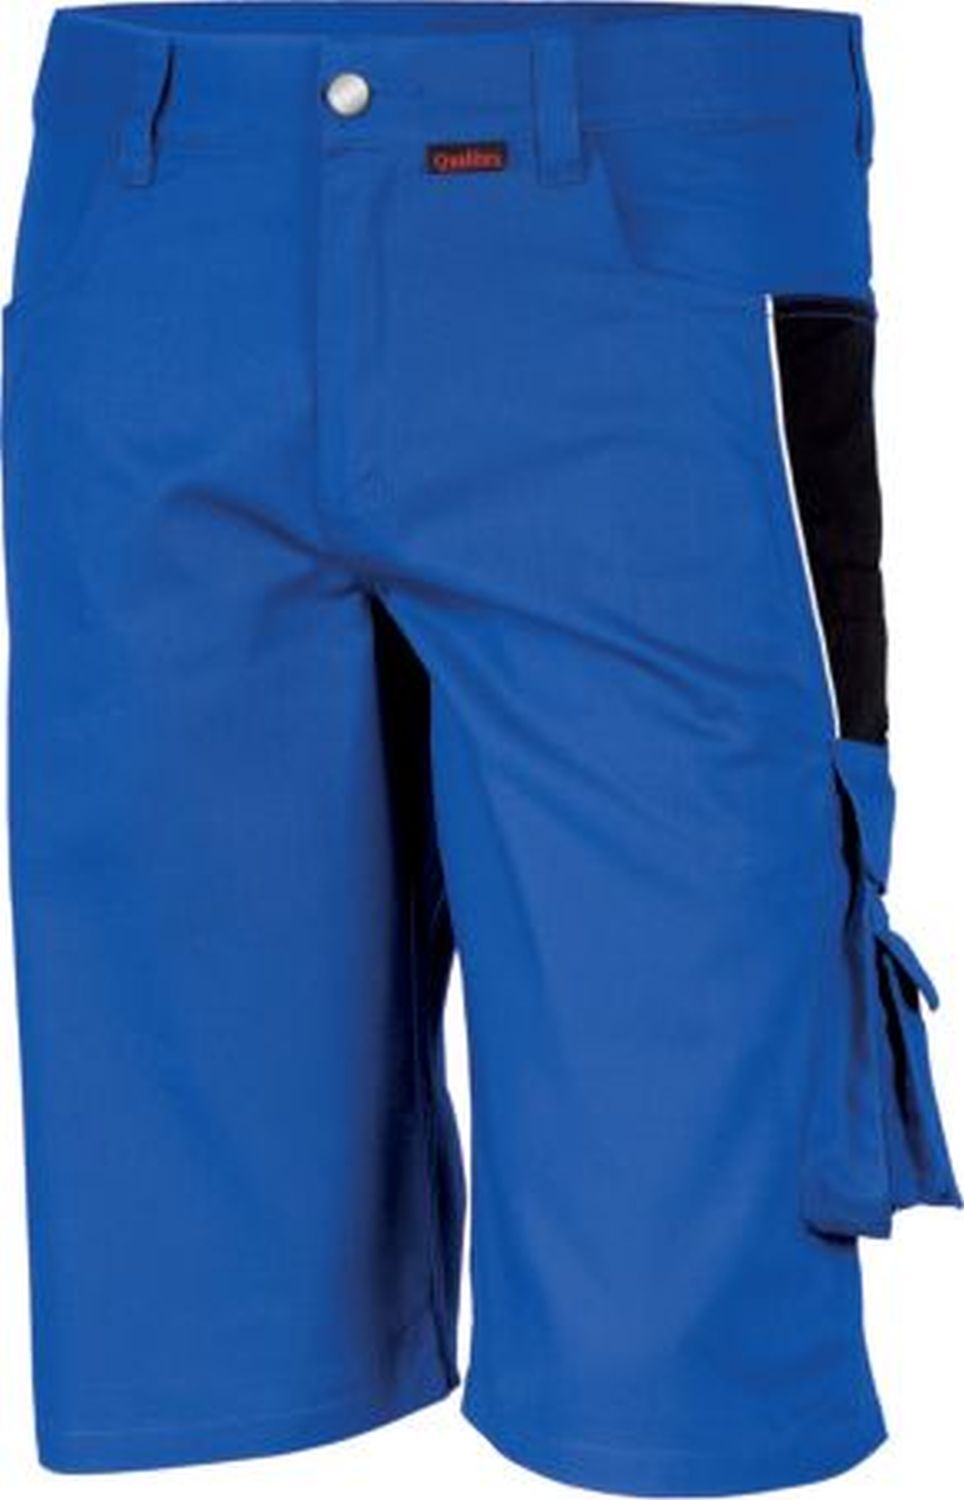 GON Shorts 600103027 - Größe 50, kornblau/schwarz